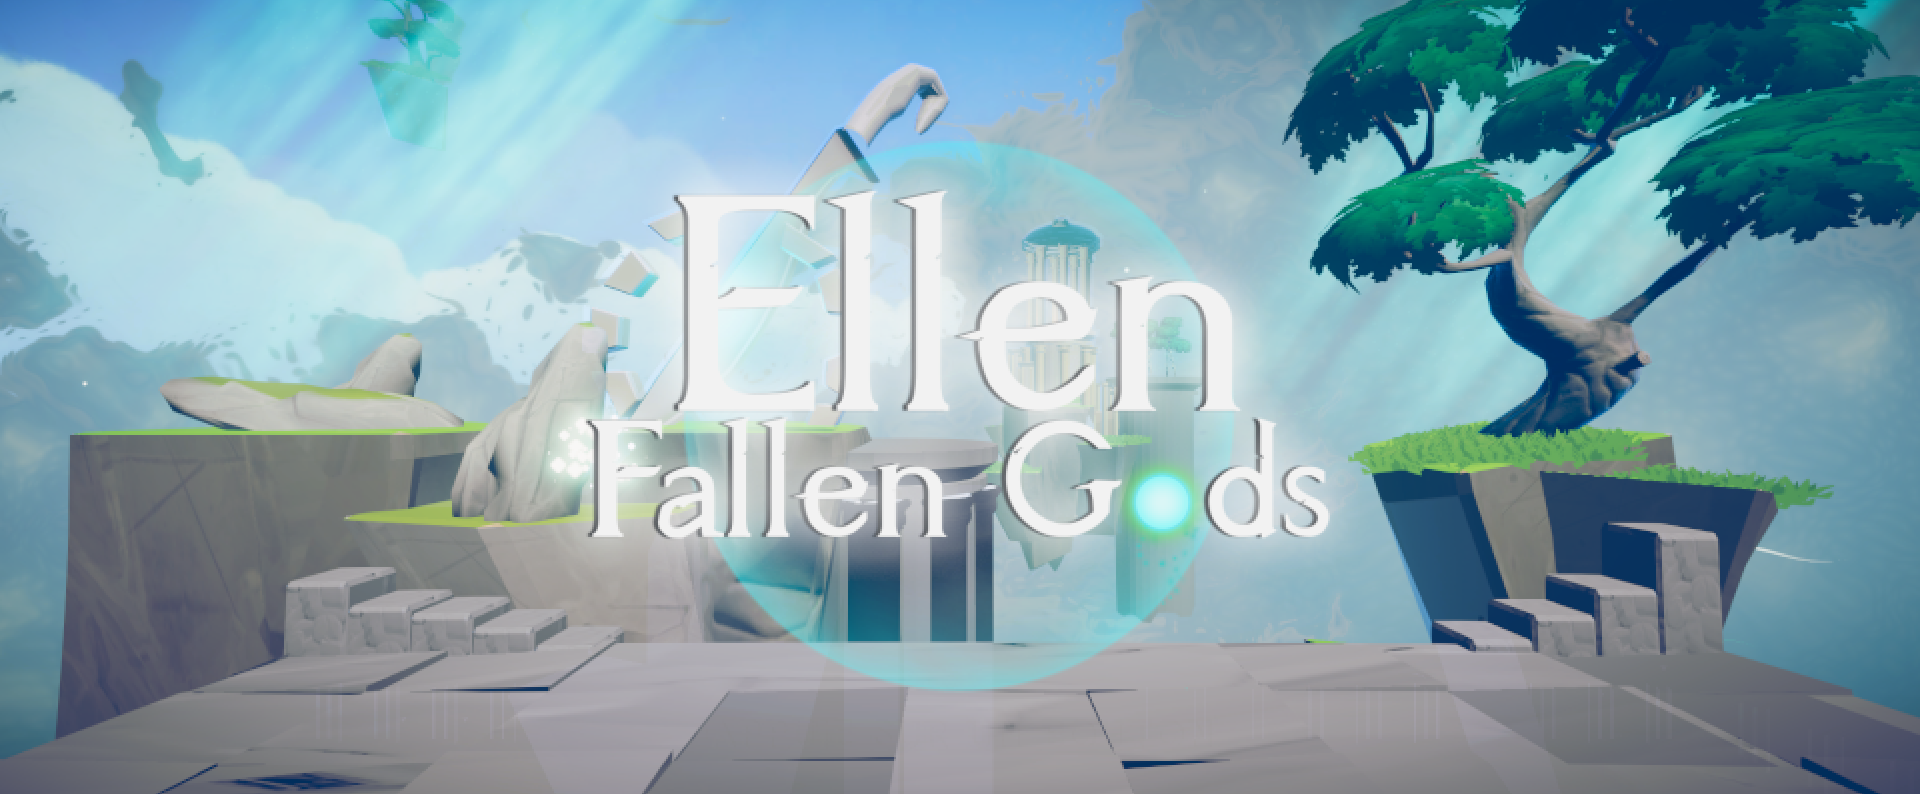 Ellen Fallen Gods